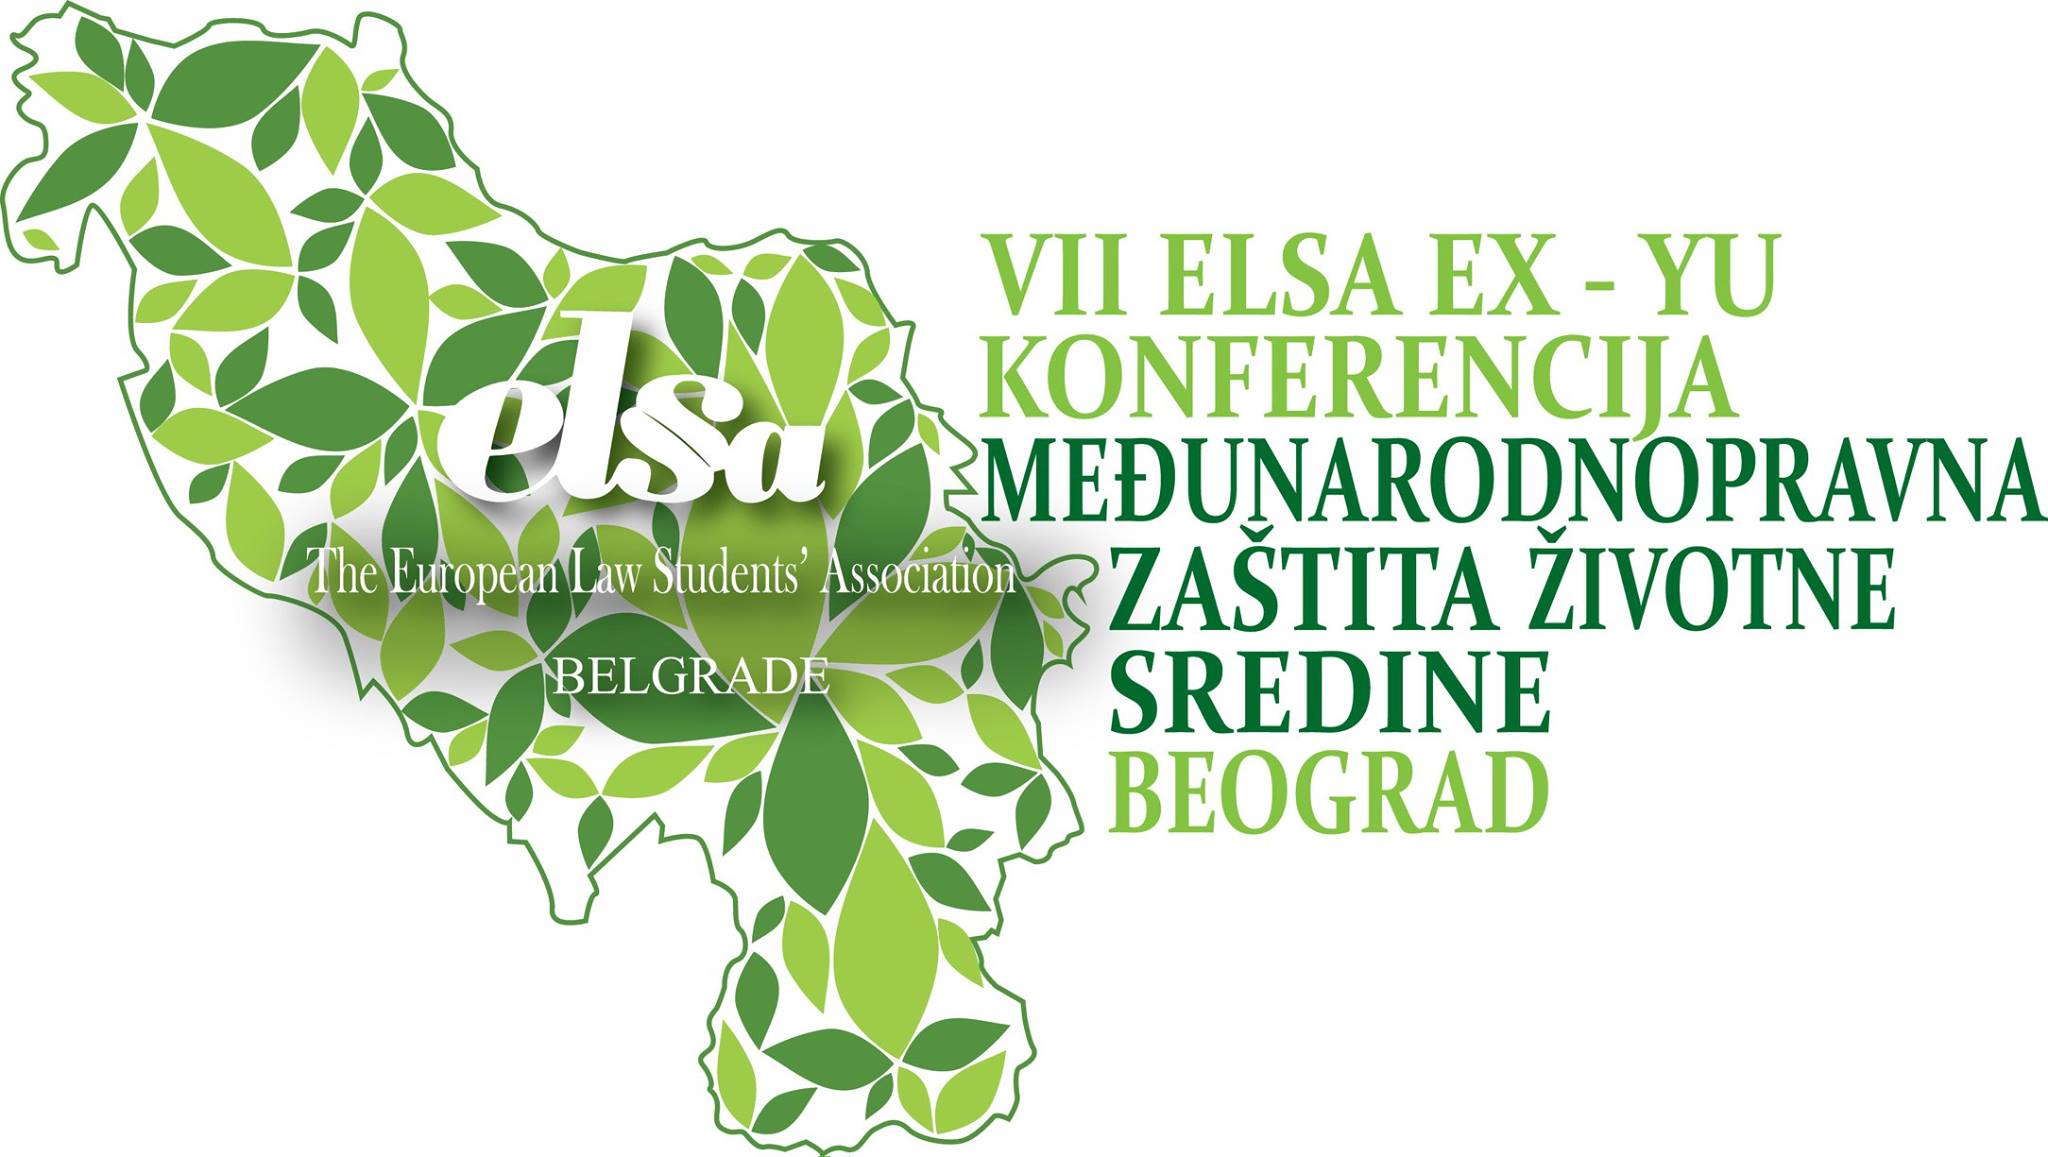 ELSA Ex-Yu logo